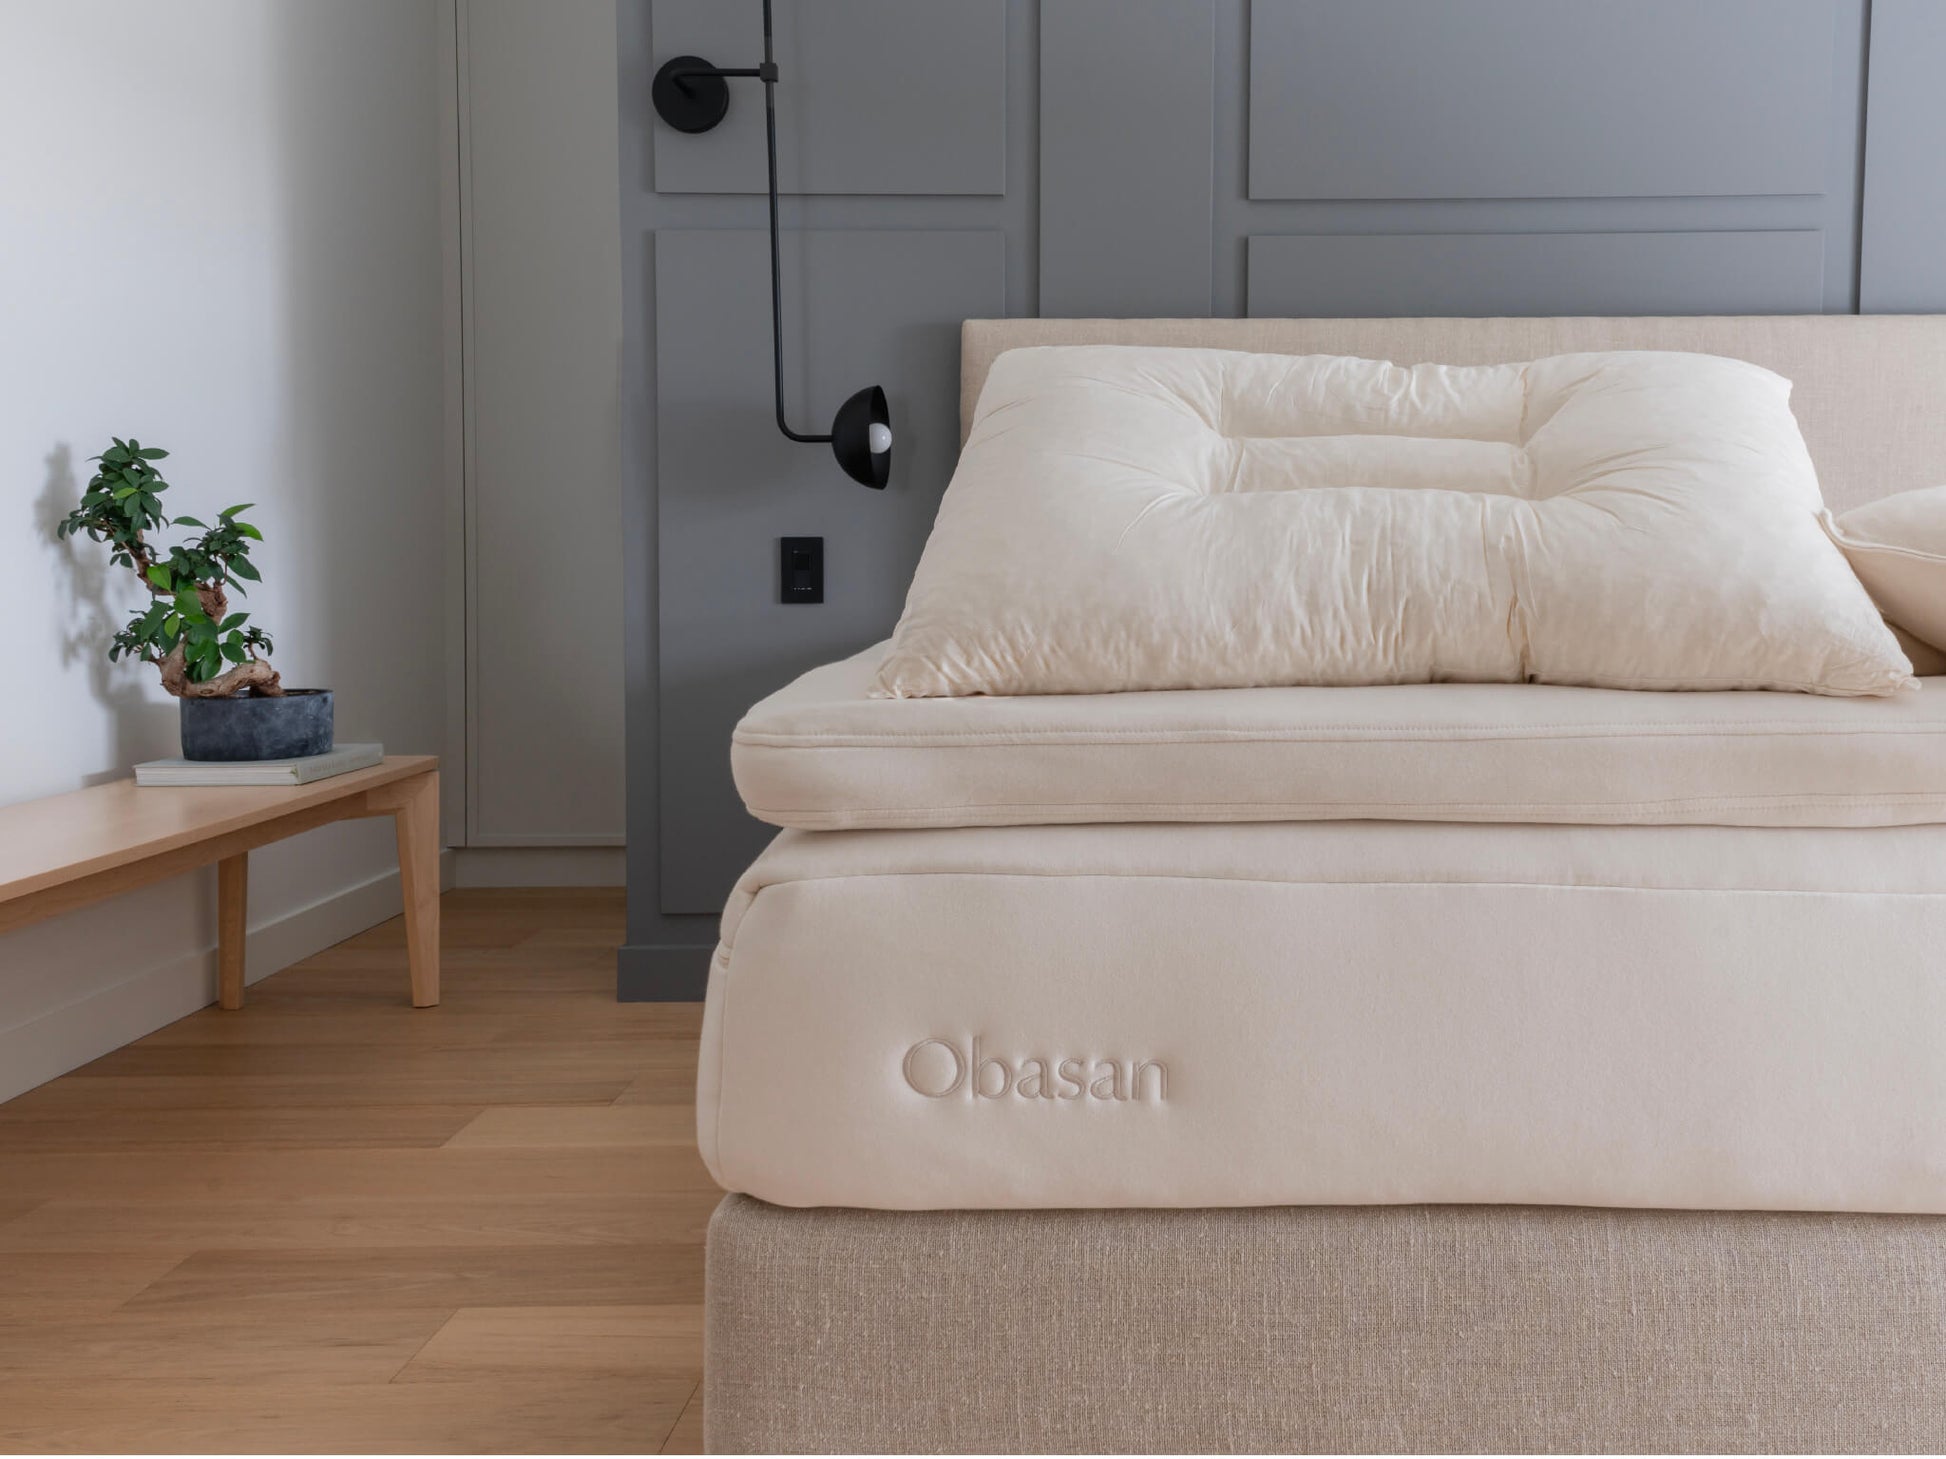 Organic contour pillow in an Obasan mattress